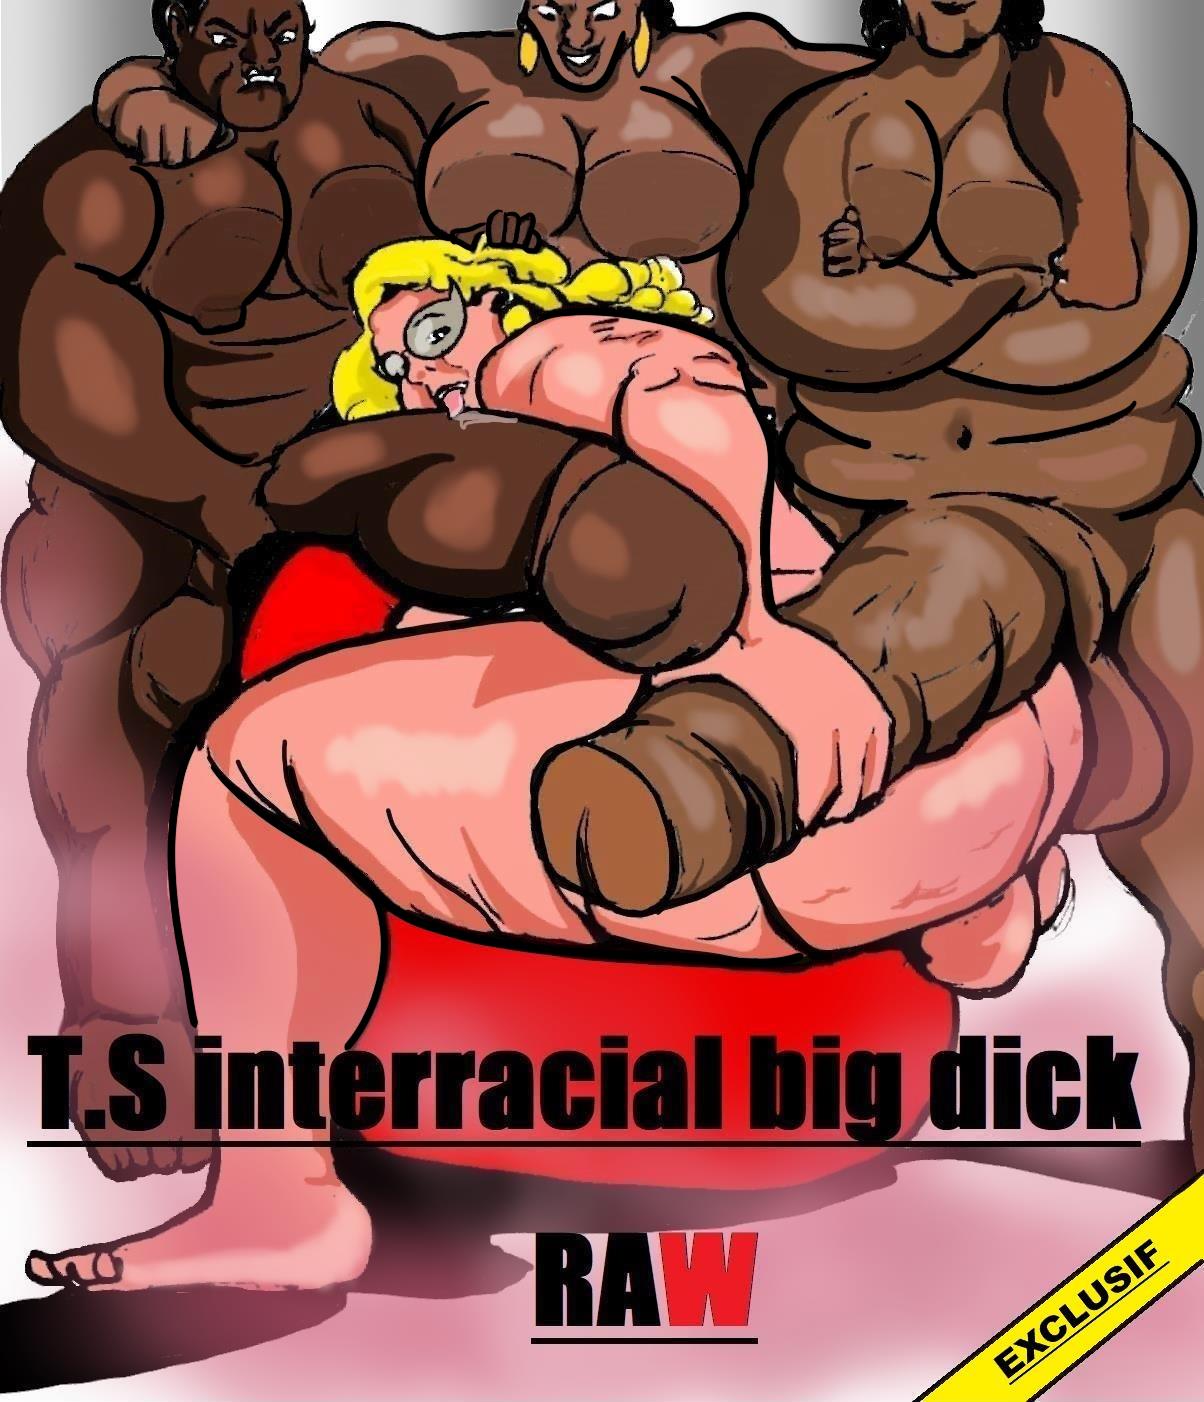 Huge Dick Shemale Cartoon - Shemale Interracial Big Dick Raw- Carter Tyron - Porn Cartoon Comics